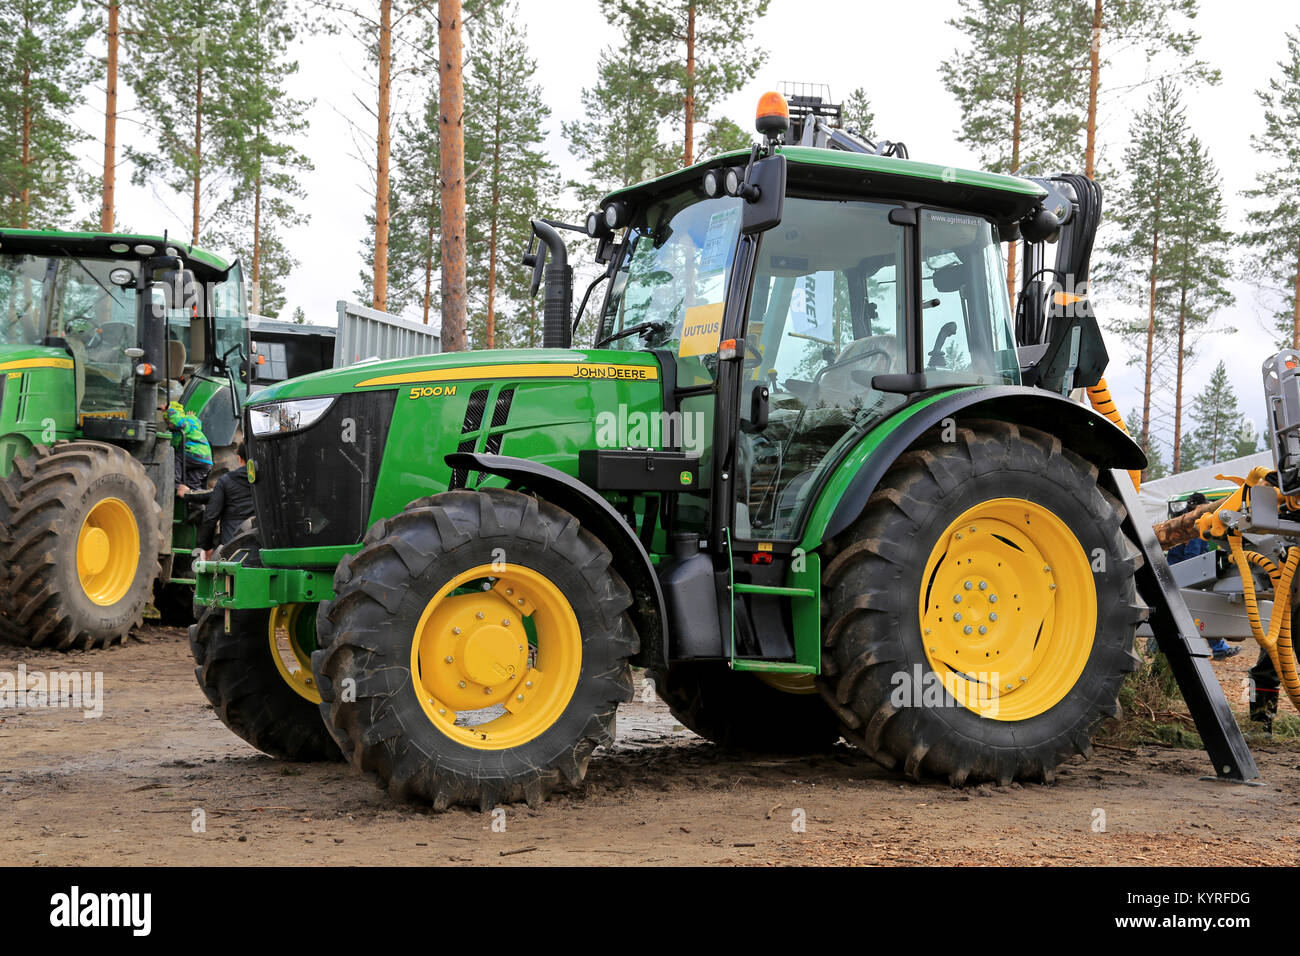 JAMSA, Finnland - 30. AUGUST 2014: John Deere präsentiert John Deere 5100M-Dienstprogramm Traktor bei FinnMETKO 2014. Stockfoto